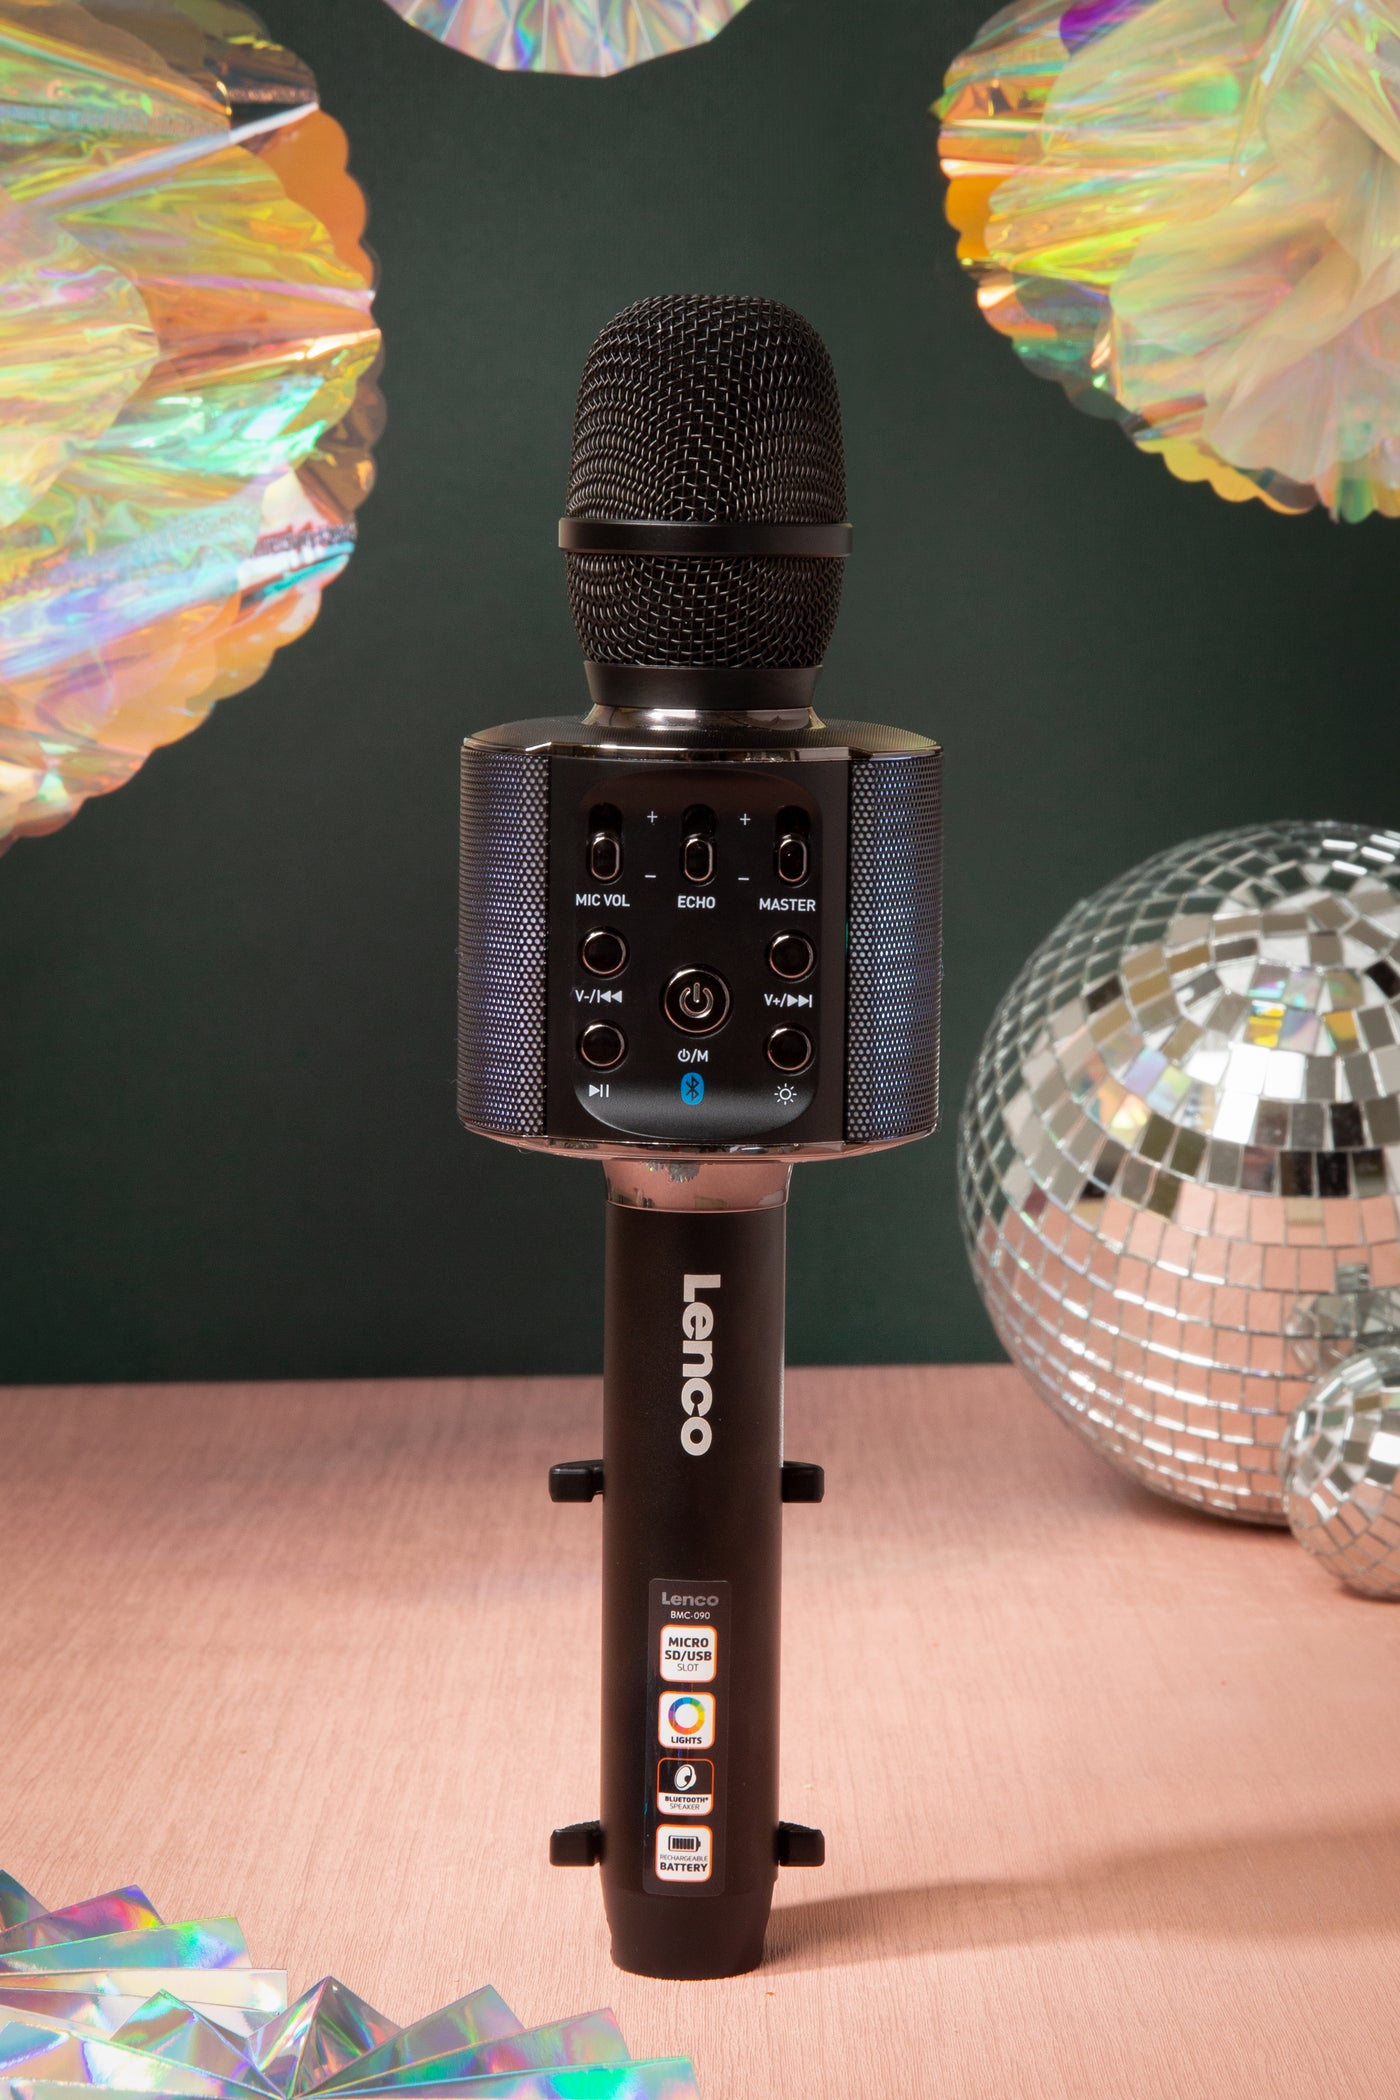 Lenco BMC-060WH Karaoke Microphone with Bluetooth, White